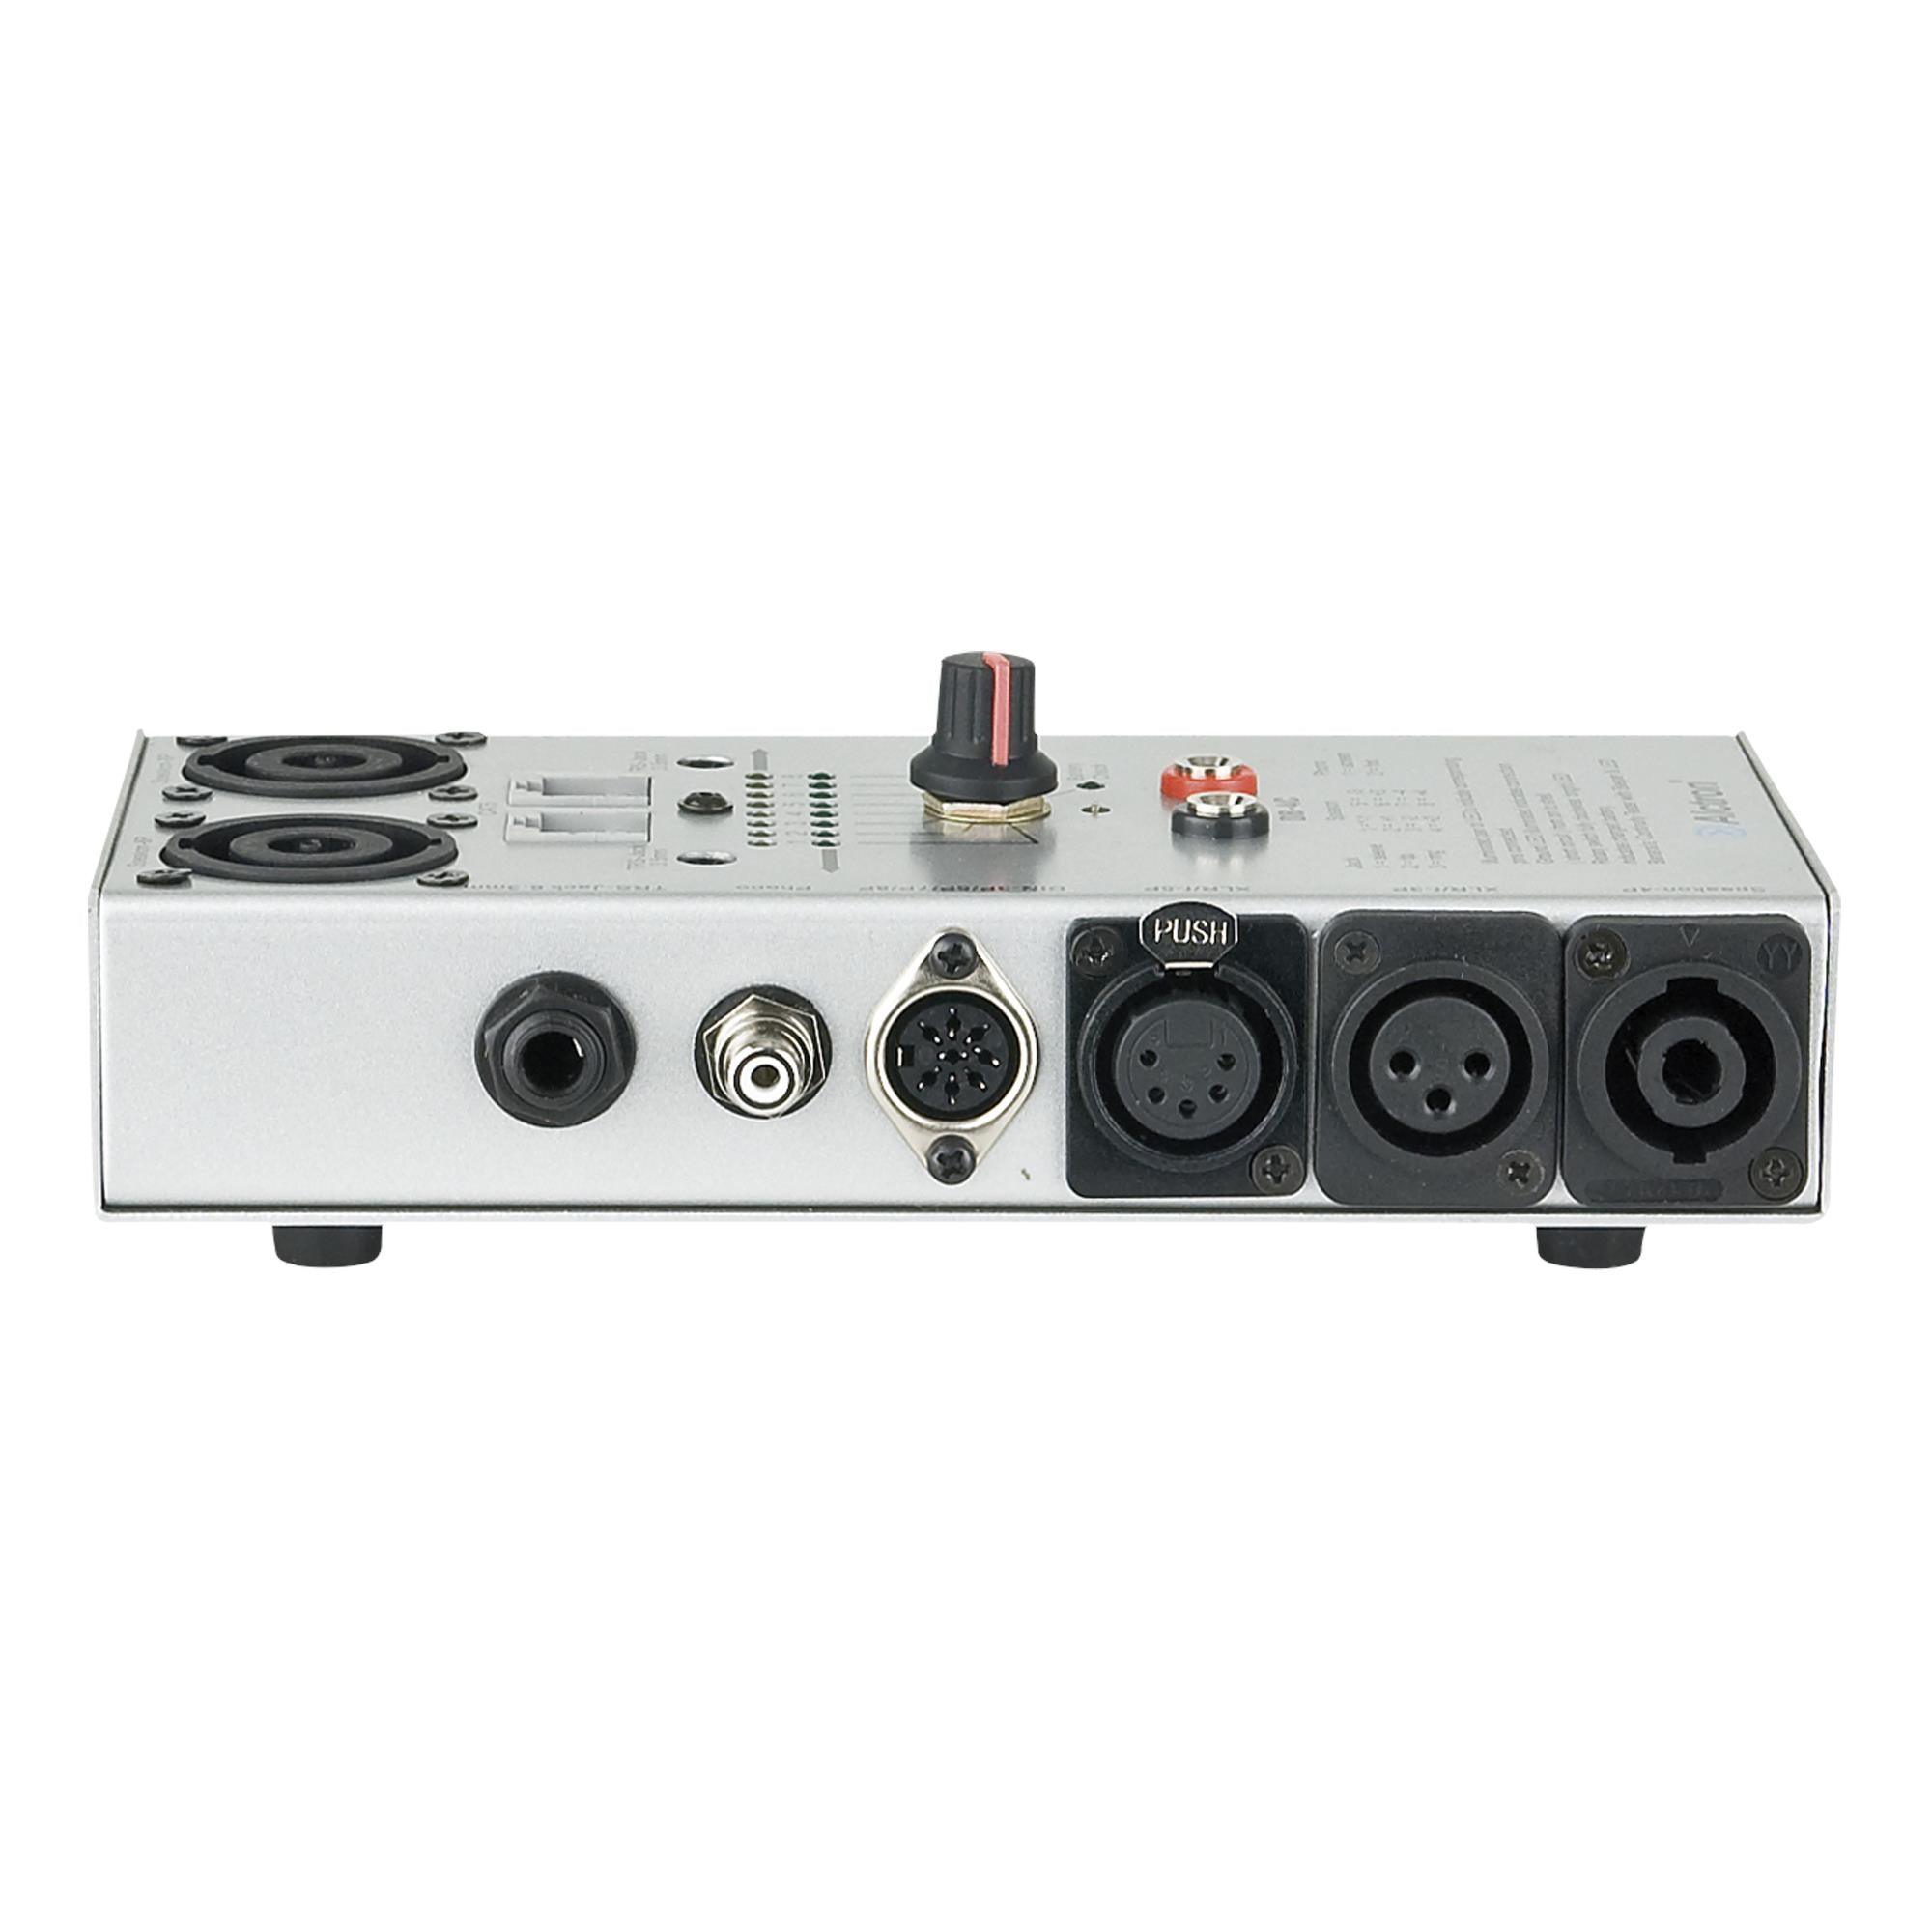 Showgear Cable Tester Pro for Audio Cables, Speakon, RJ45, RCA, XLR & MORE! - DY Pro Audio